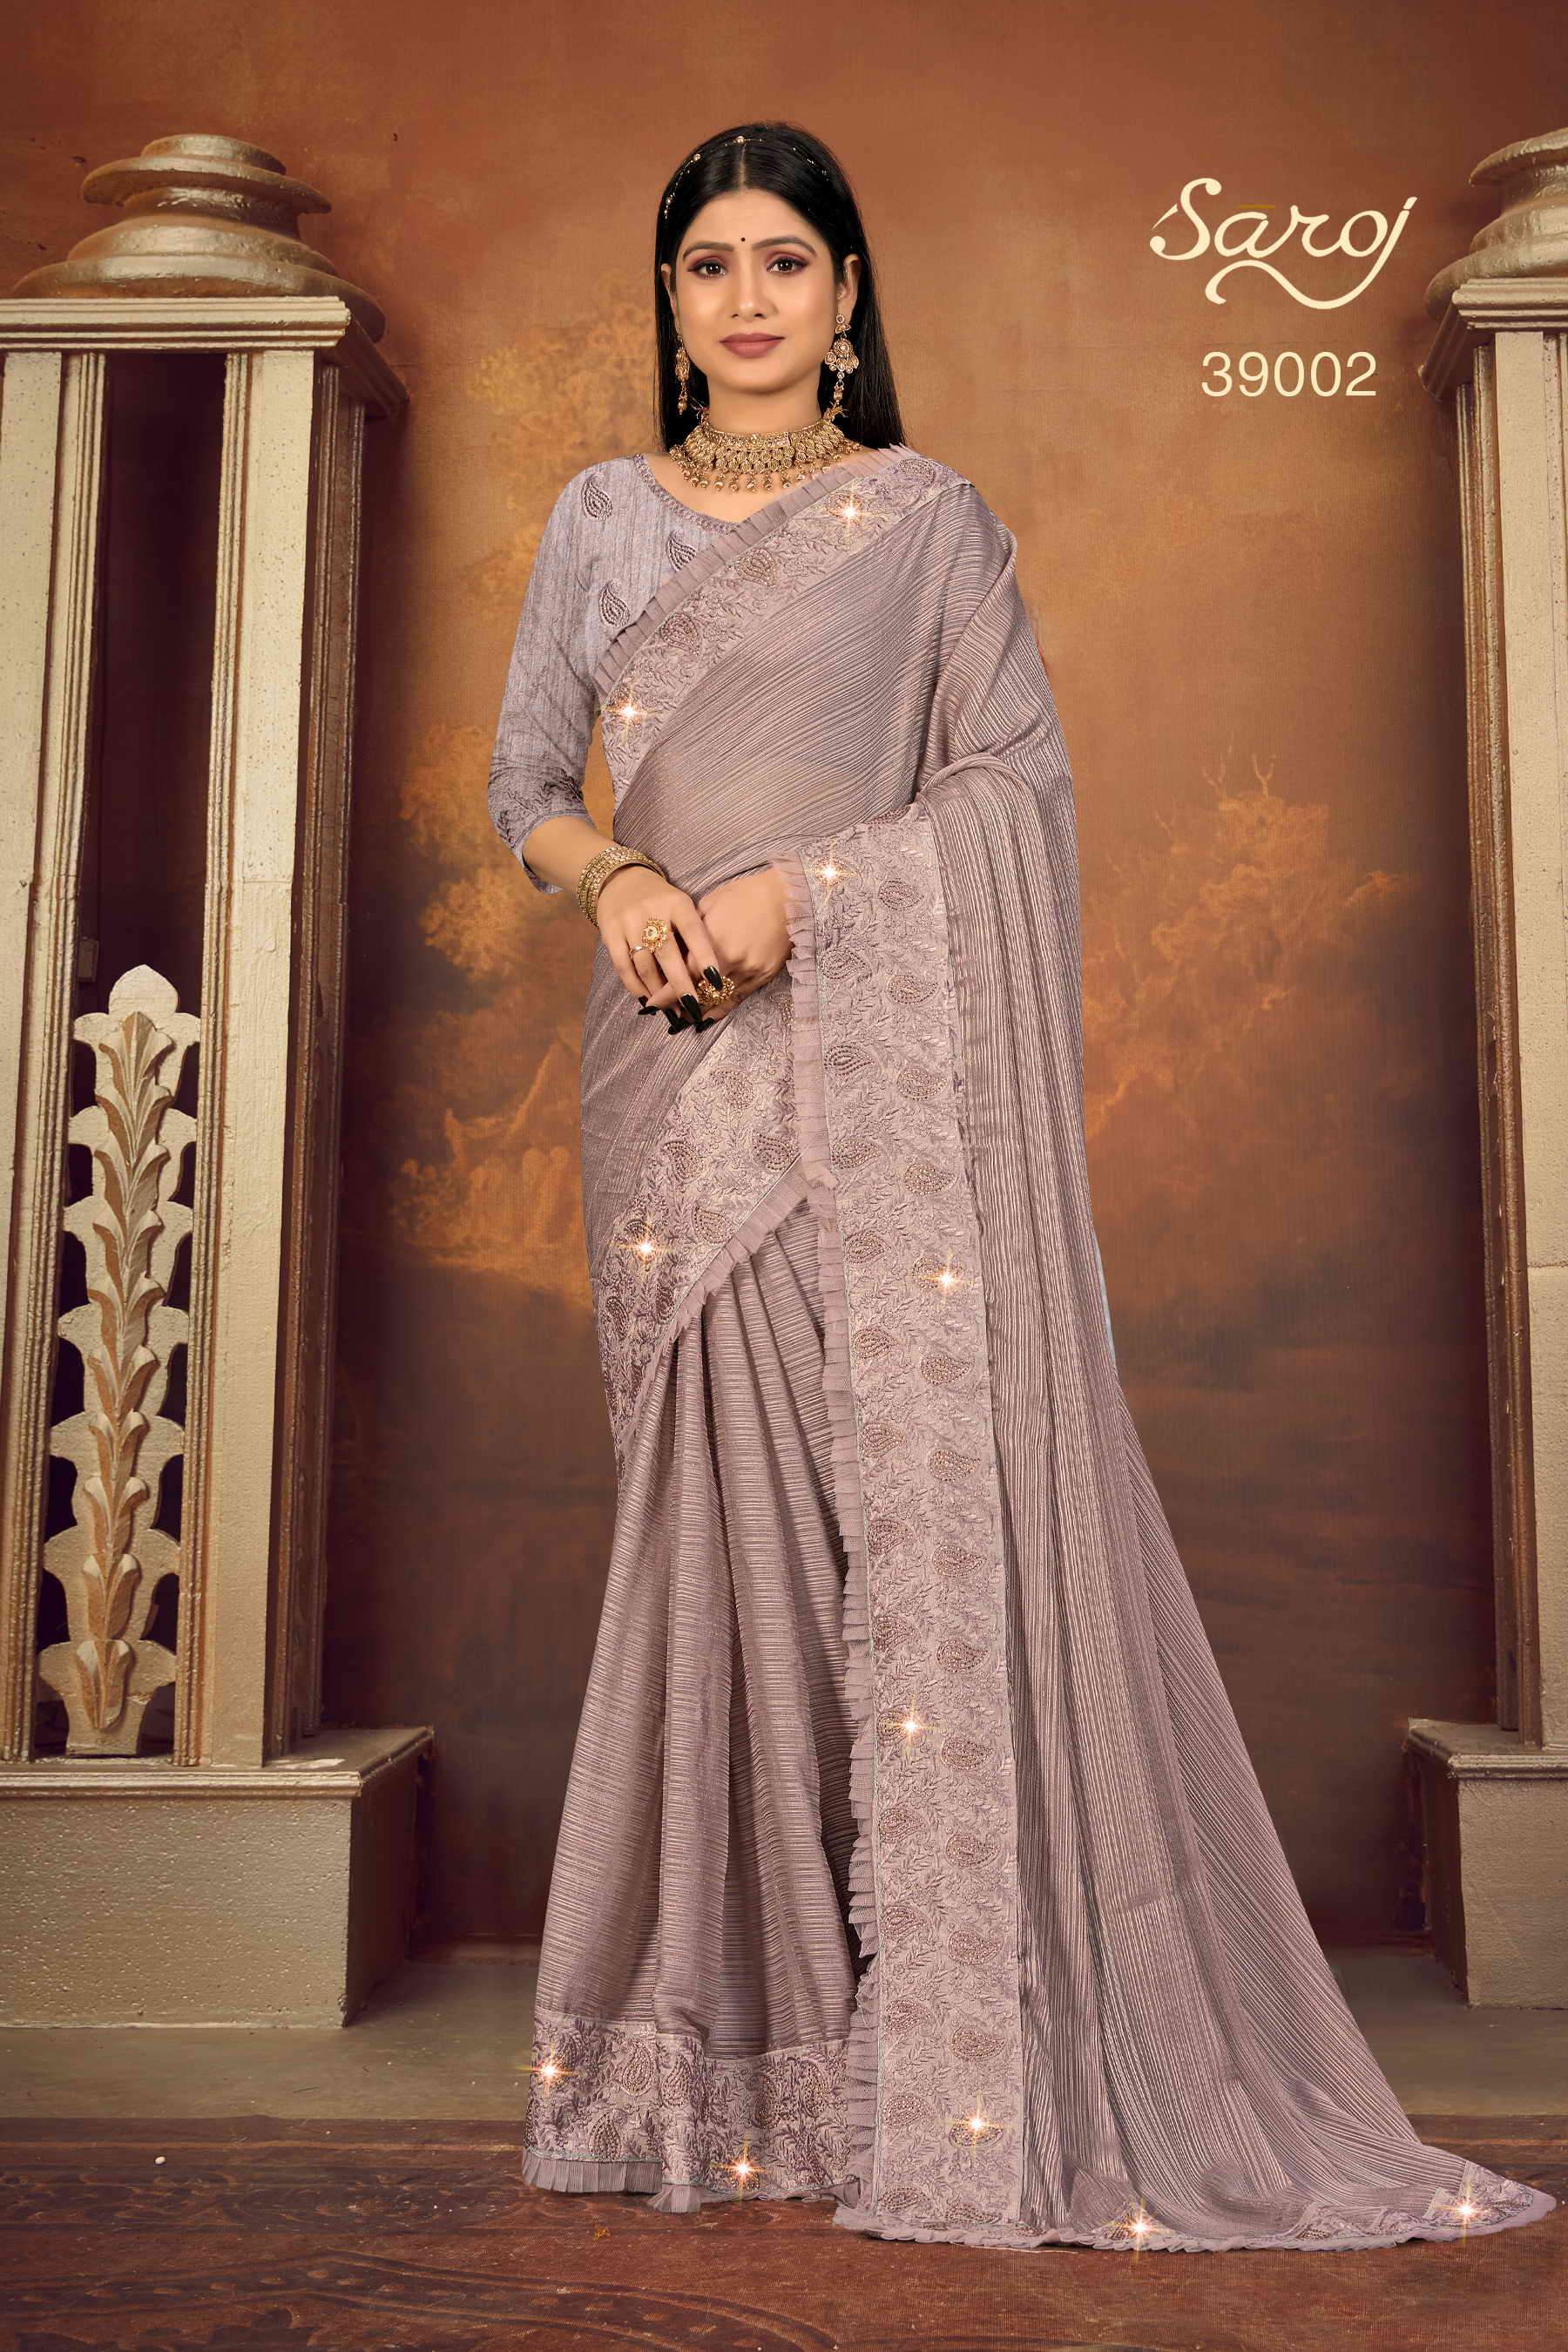 Saroj textile presents Saathiya Designer sarees catalogue